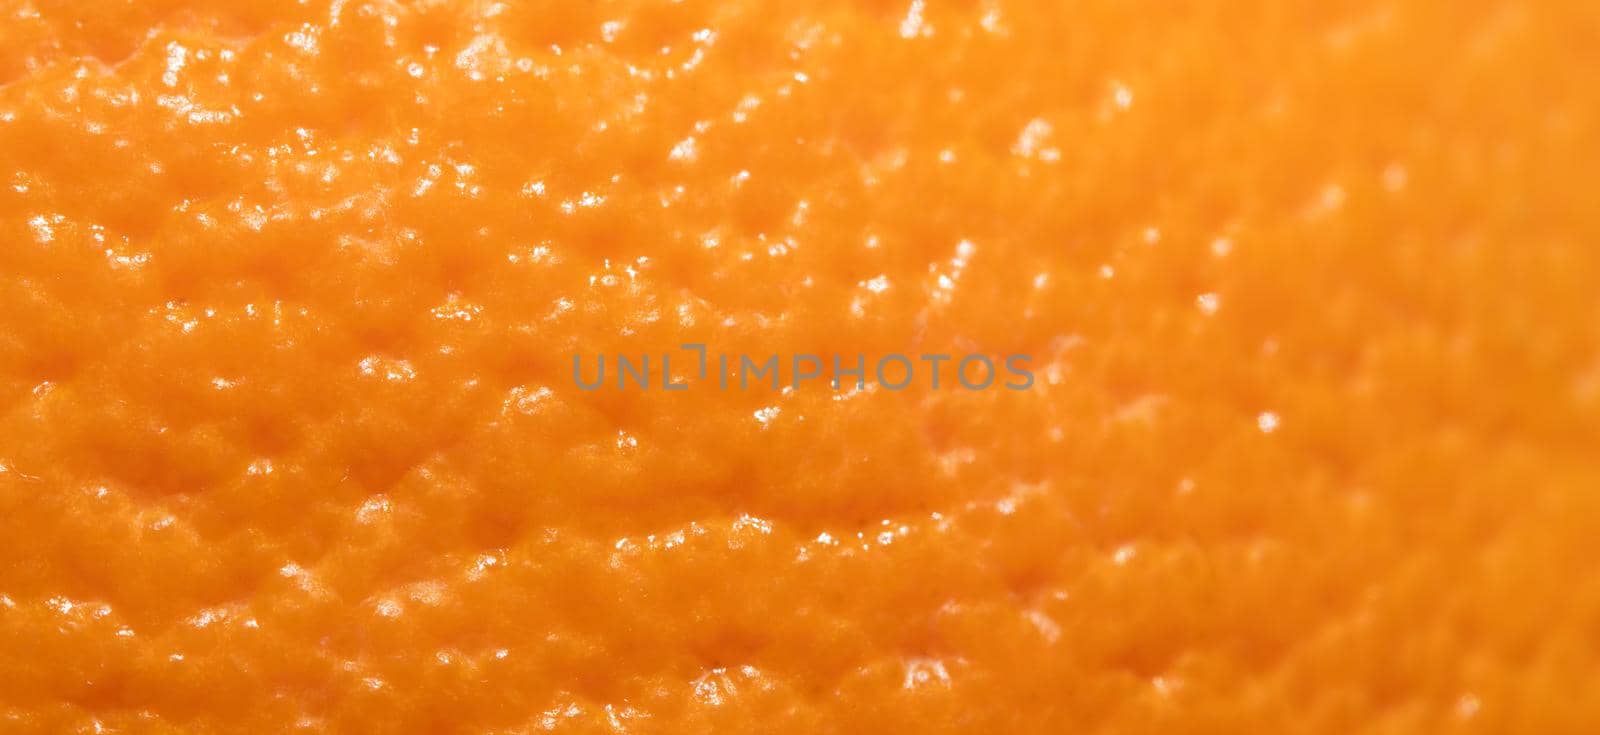 Ripe orange peel background. Close up view by Olayola